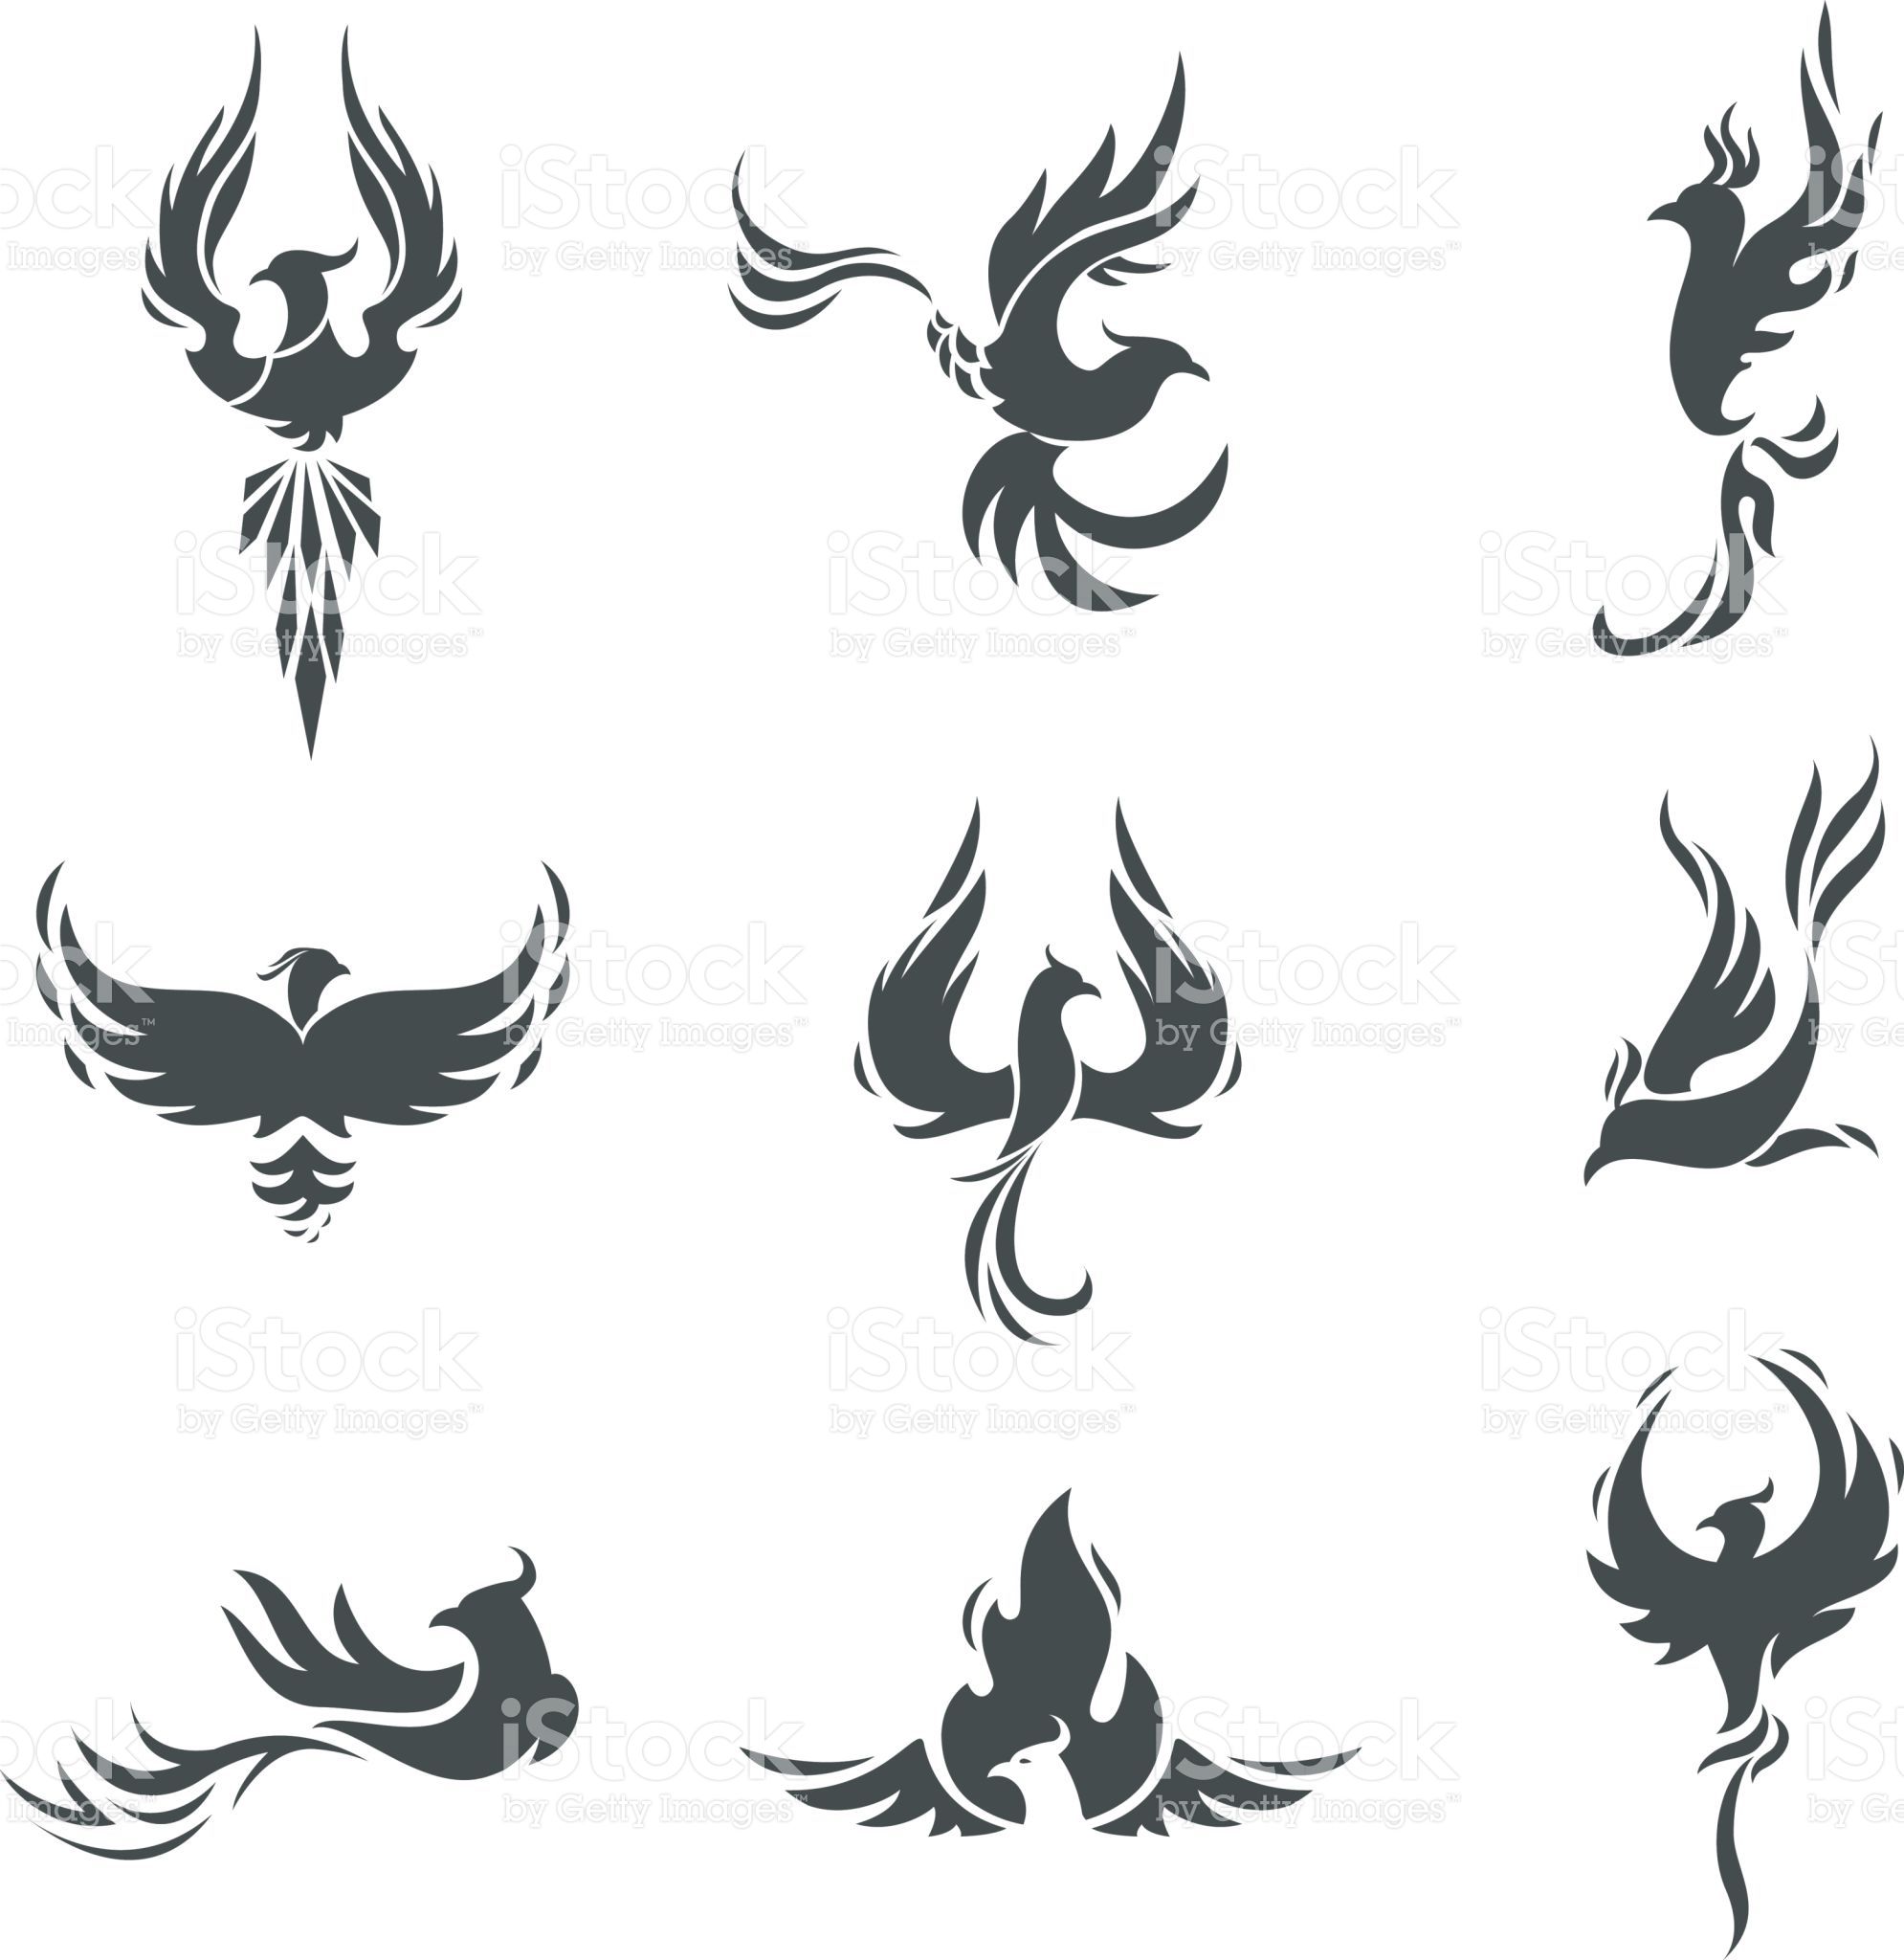 phoenix clipart stylized